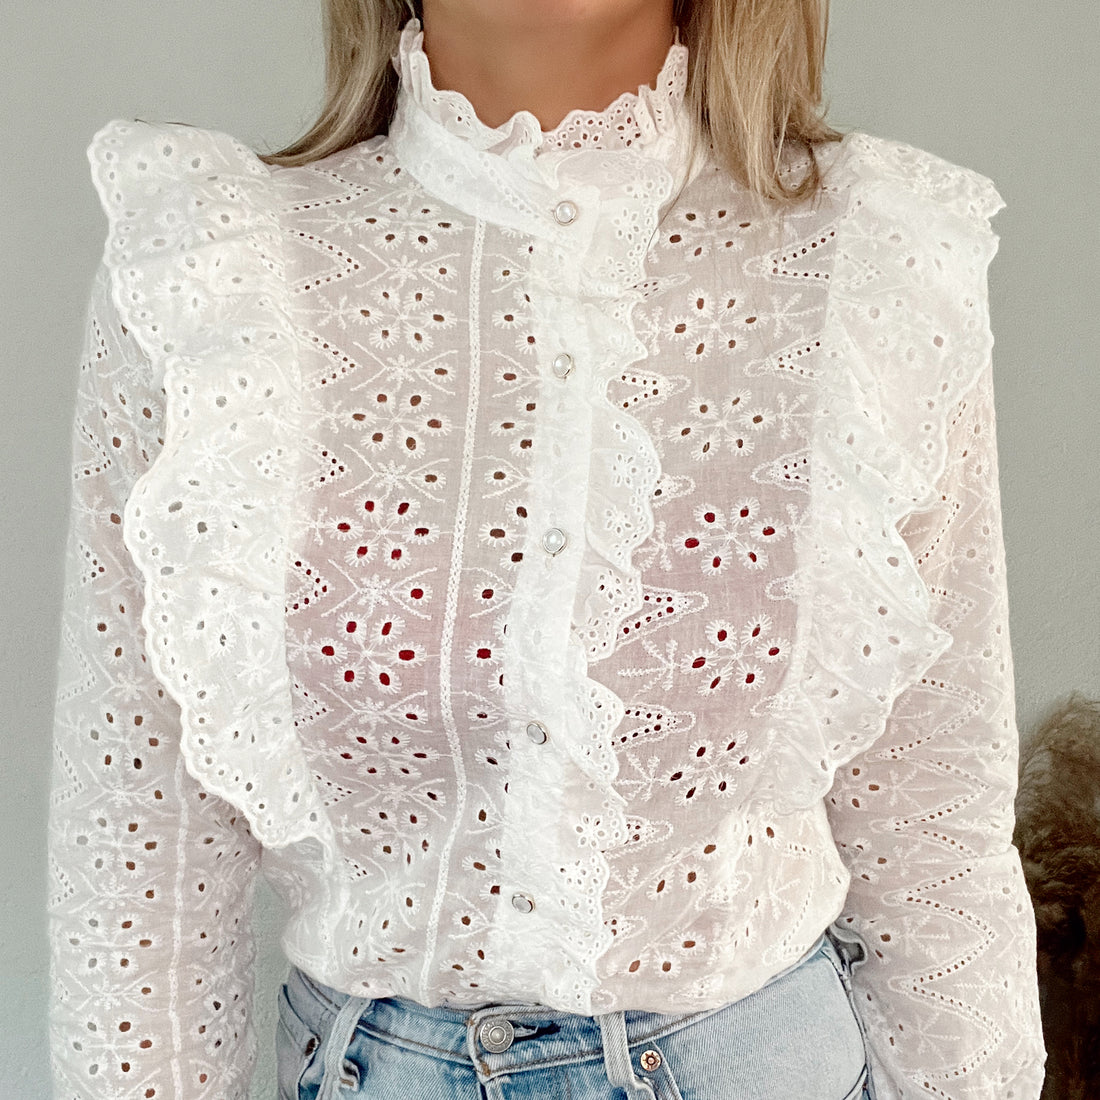 Witte broderie blouse met ruffle detail en parelmoer knoopjes. De blouse is van 100% katoen en valt normaal op maat. Witte broderie blouse met ruches en parelmoer knopen katoen.